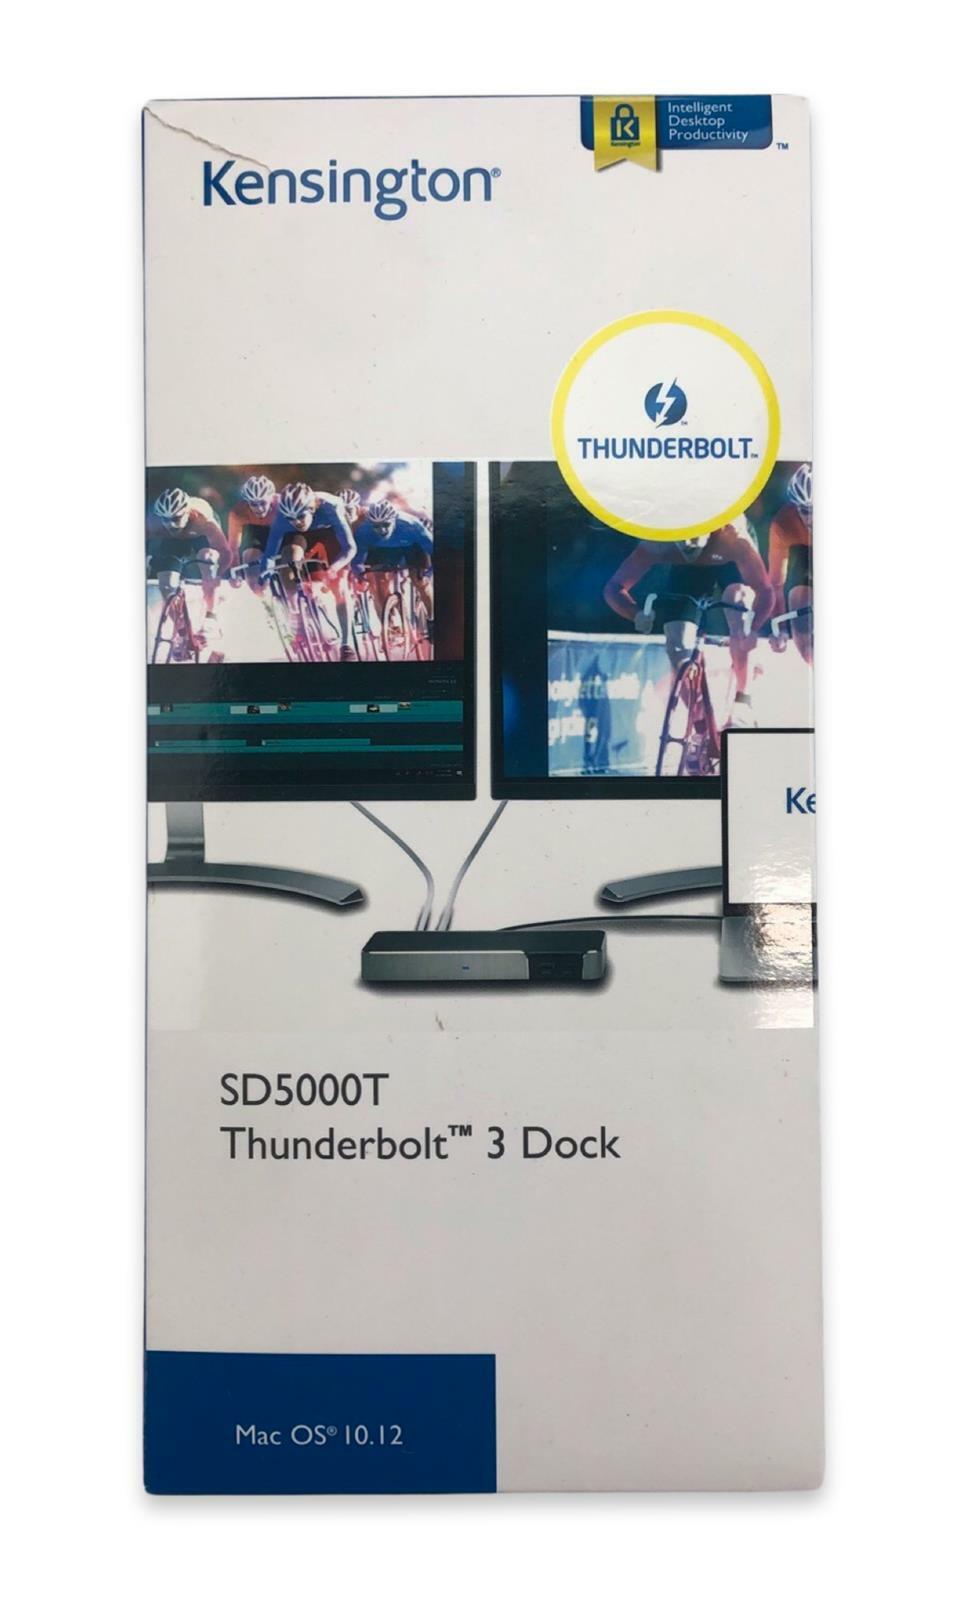 NEW - Open Box - Kensington SD5000T Thunderbolt 3 Dock USB-C Docking Station